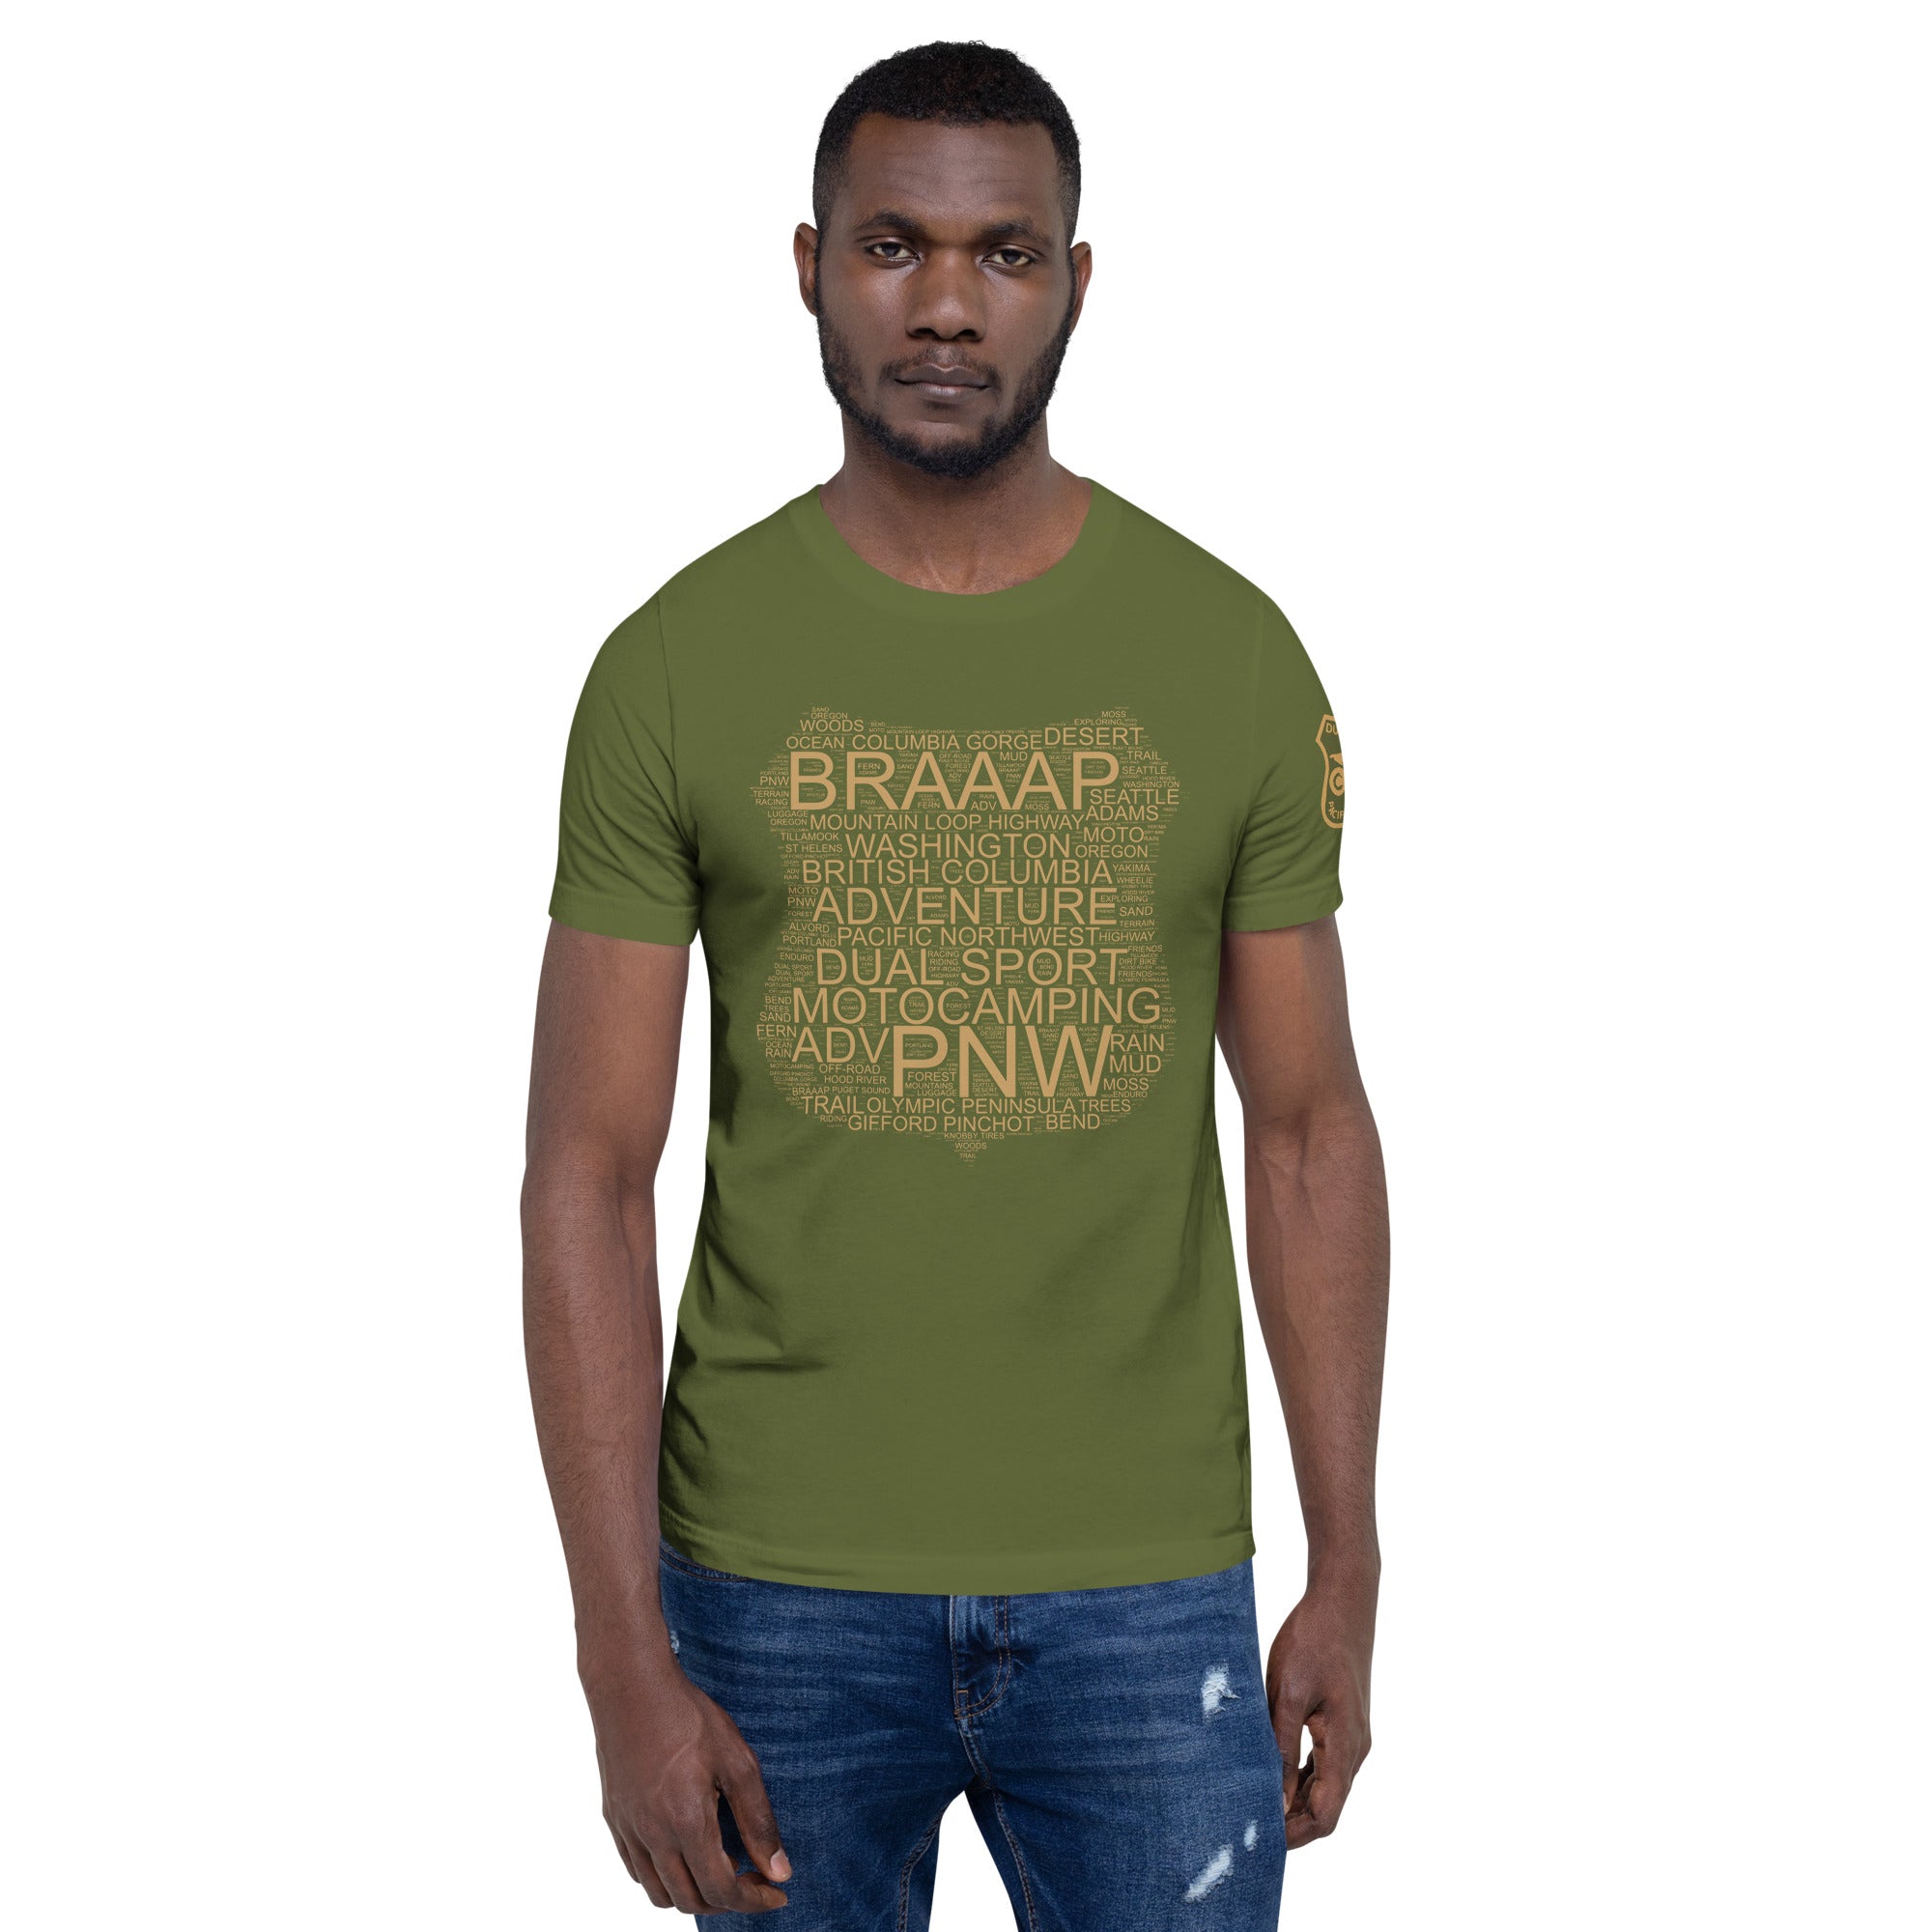 Word Cloud Shirt, Premium, PNWDS